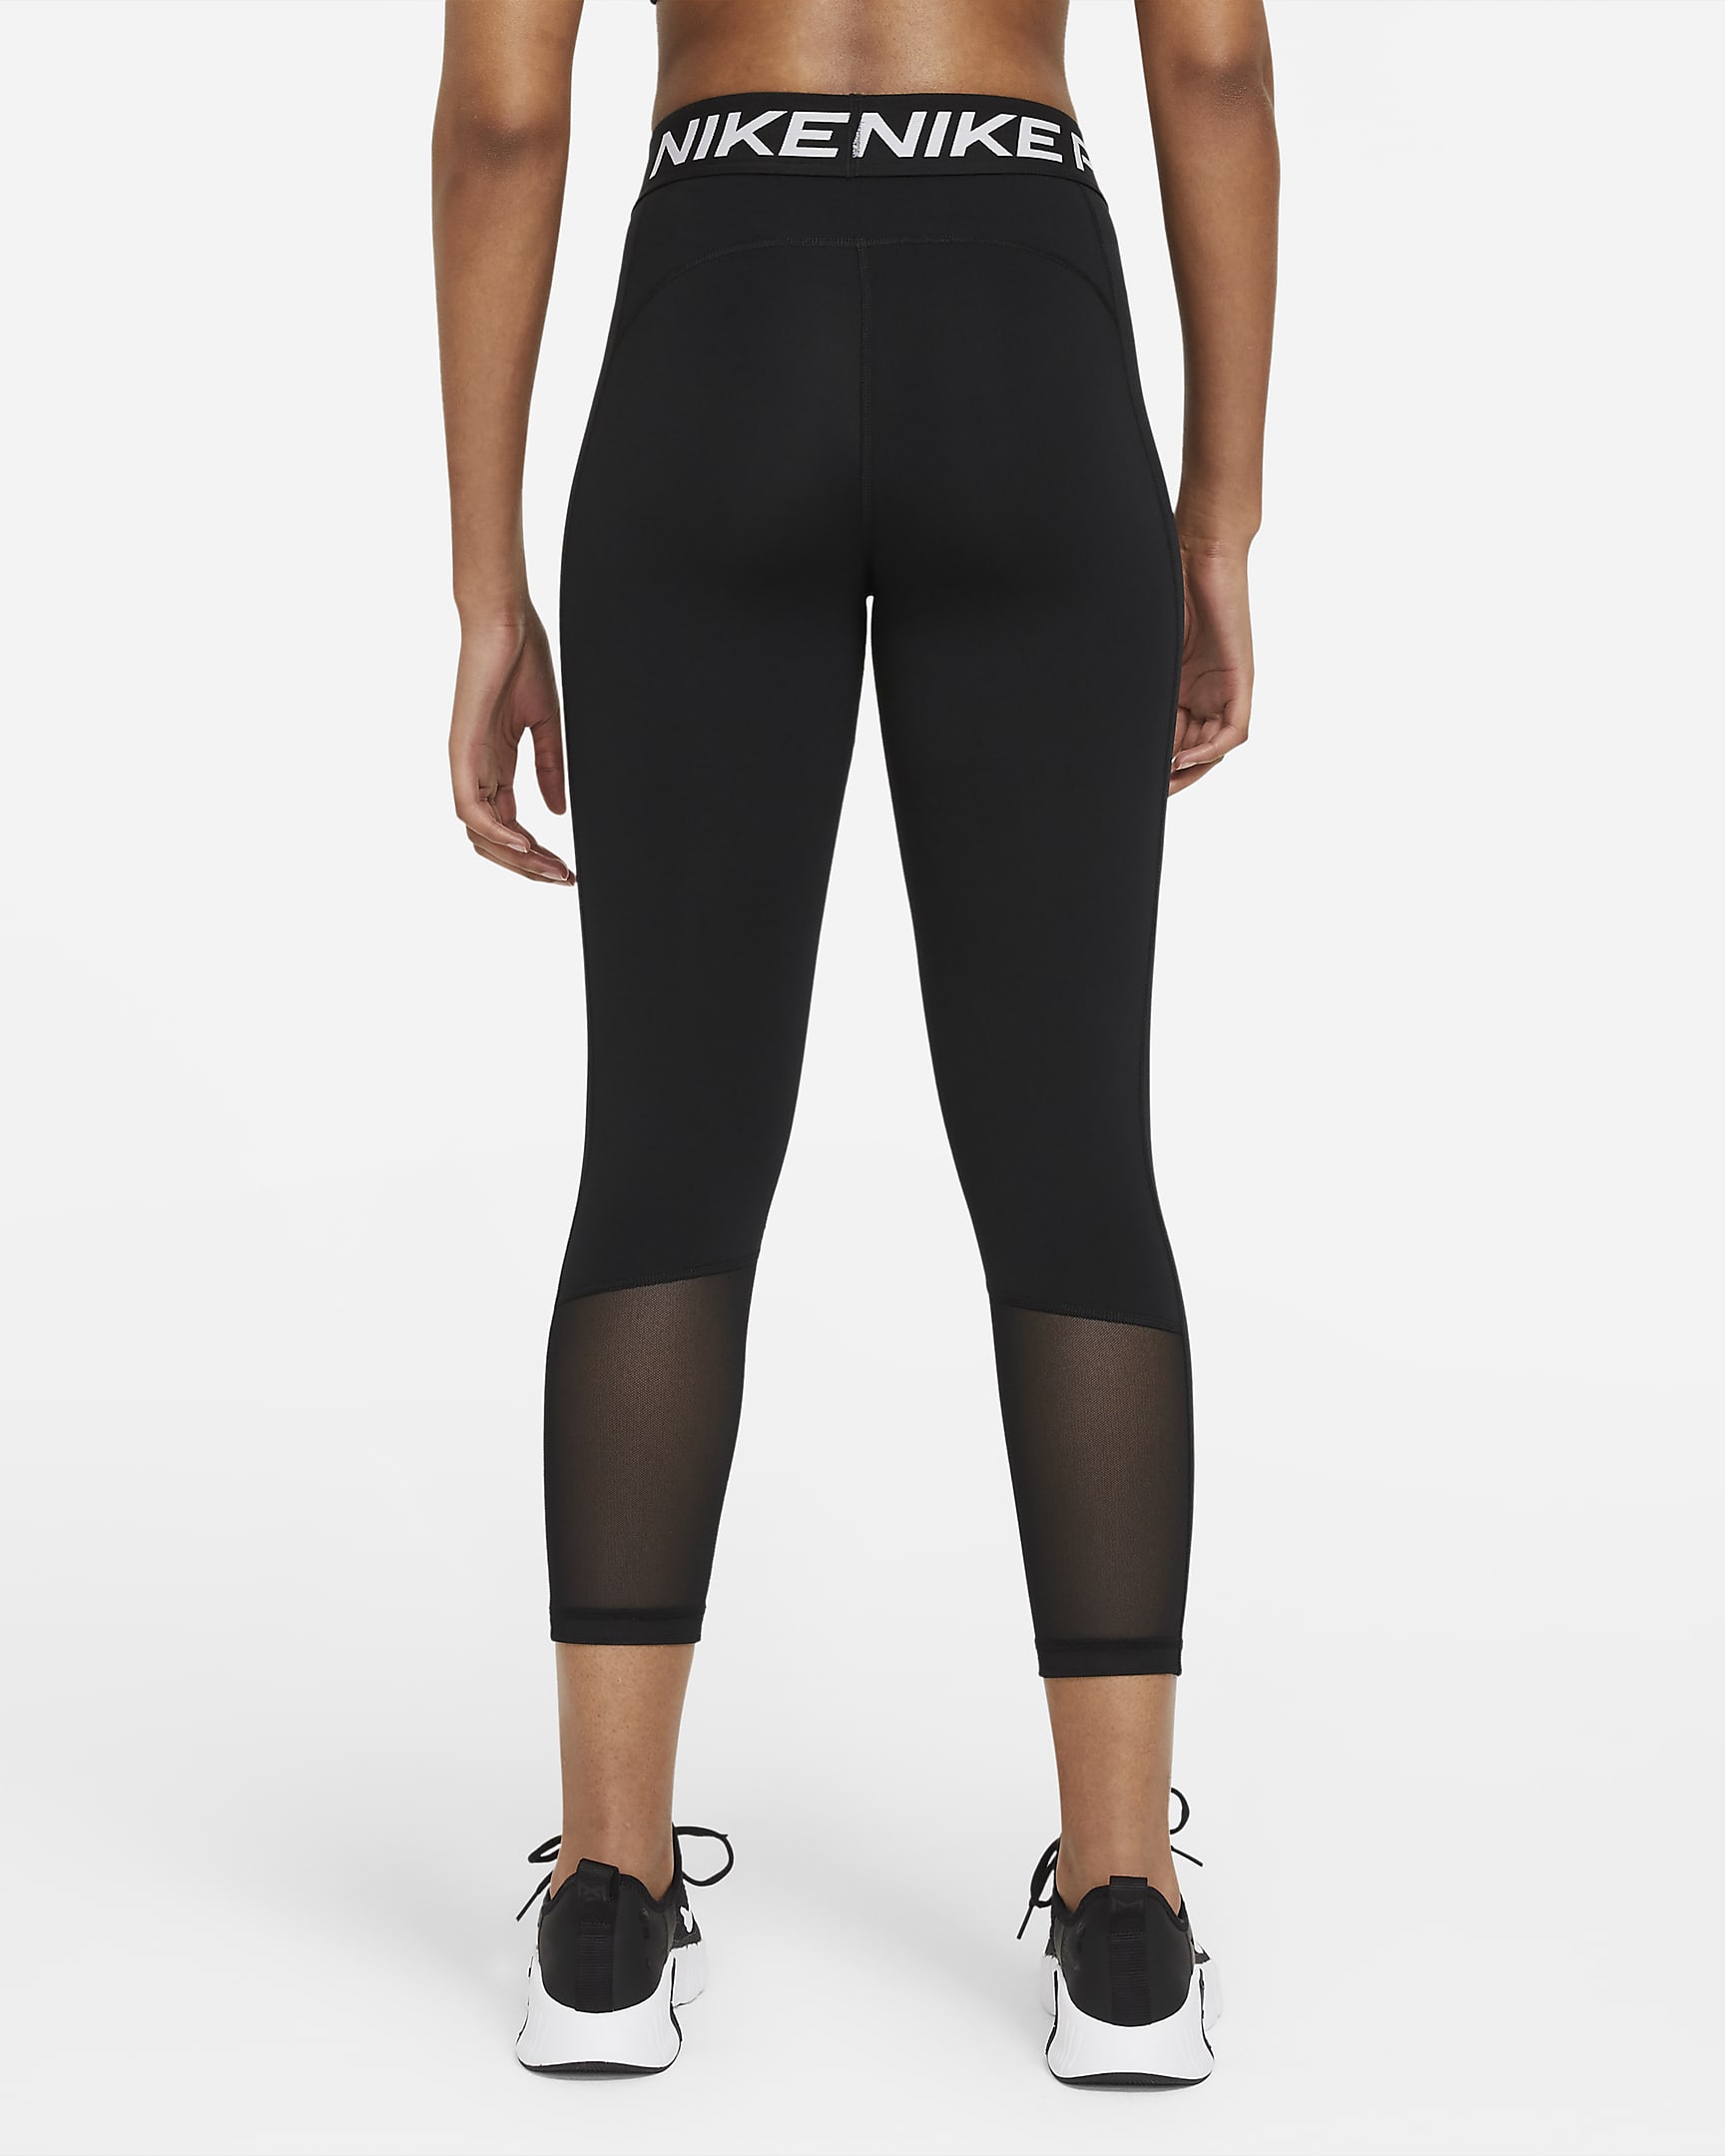 Nike Pro Leggings cortos de talle medio con panel de malla - Mujer - Negro/Blanco